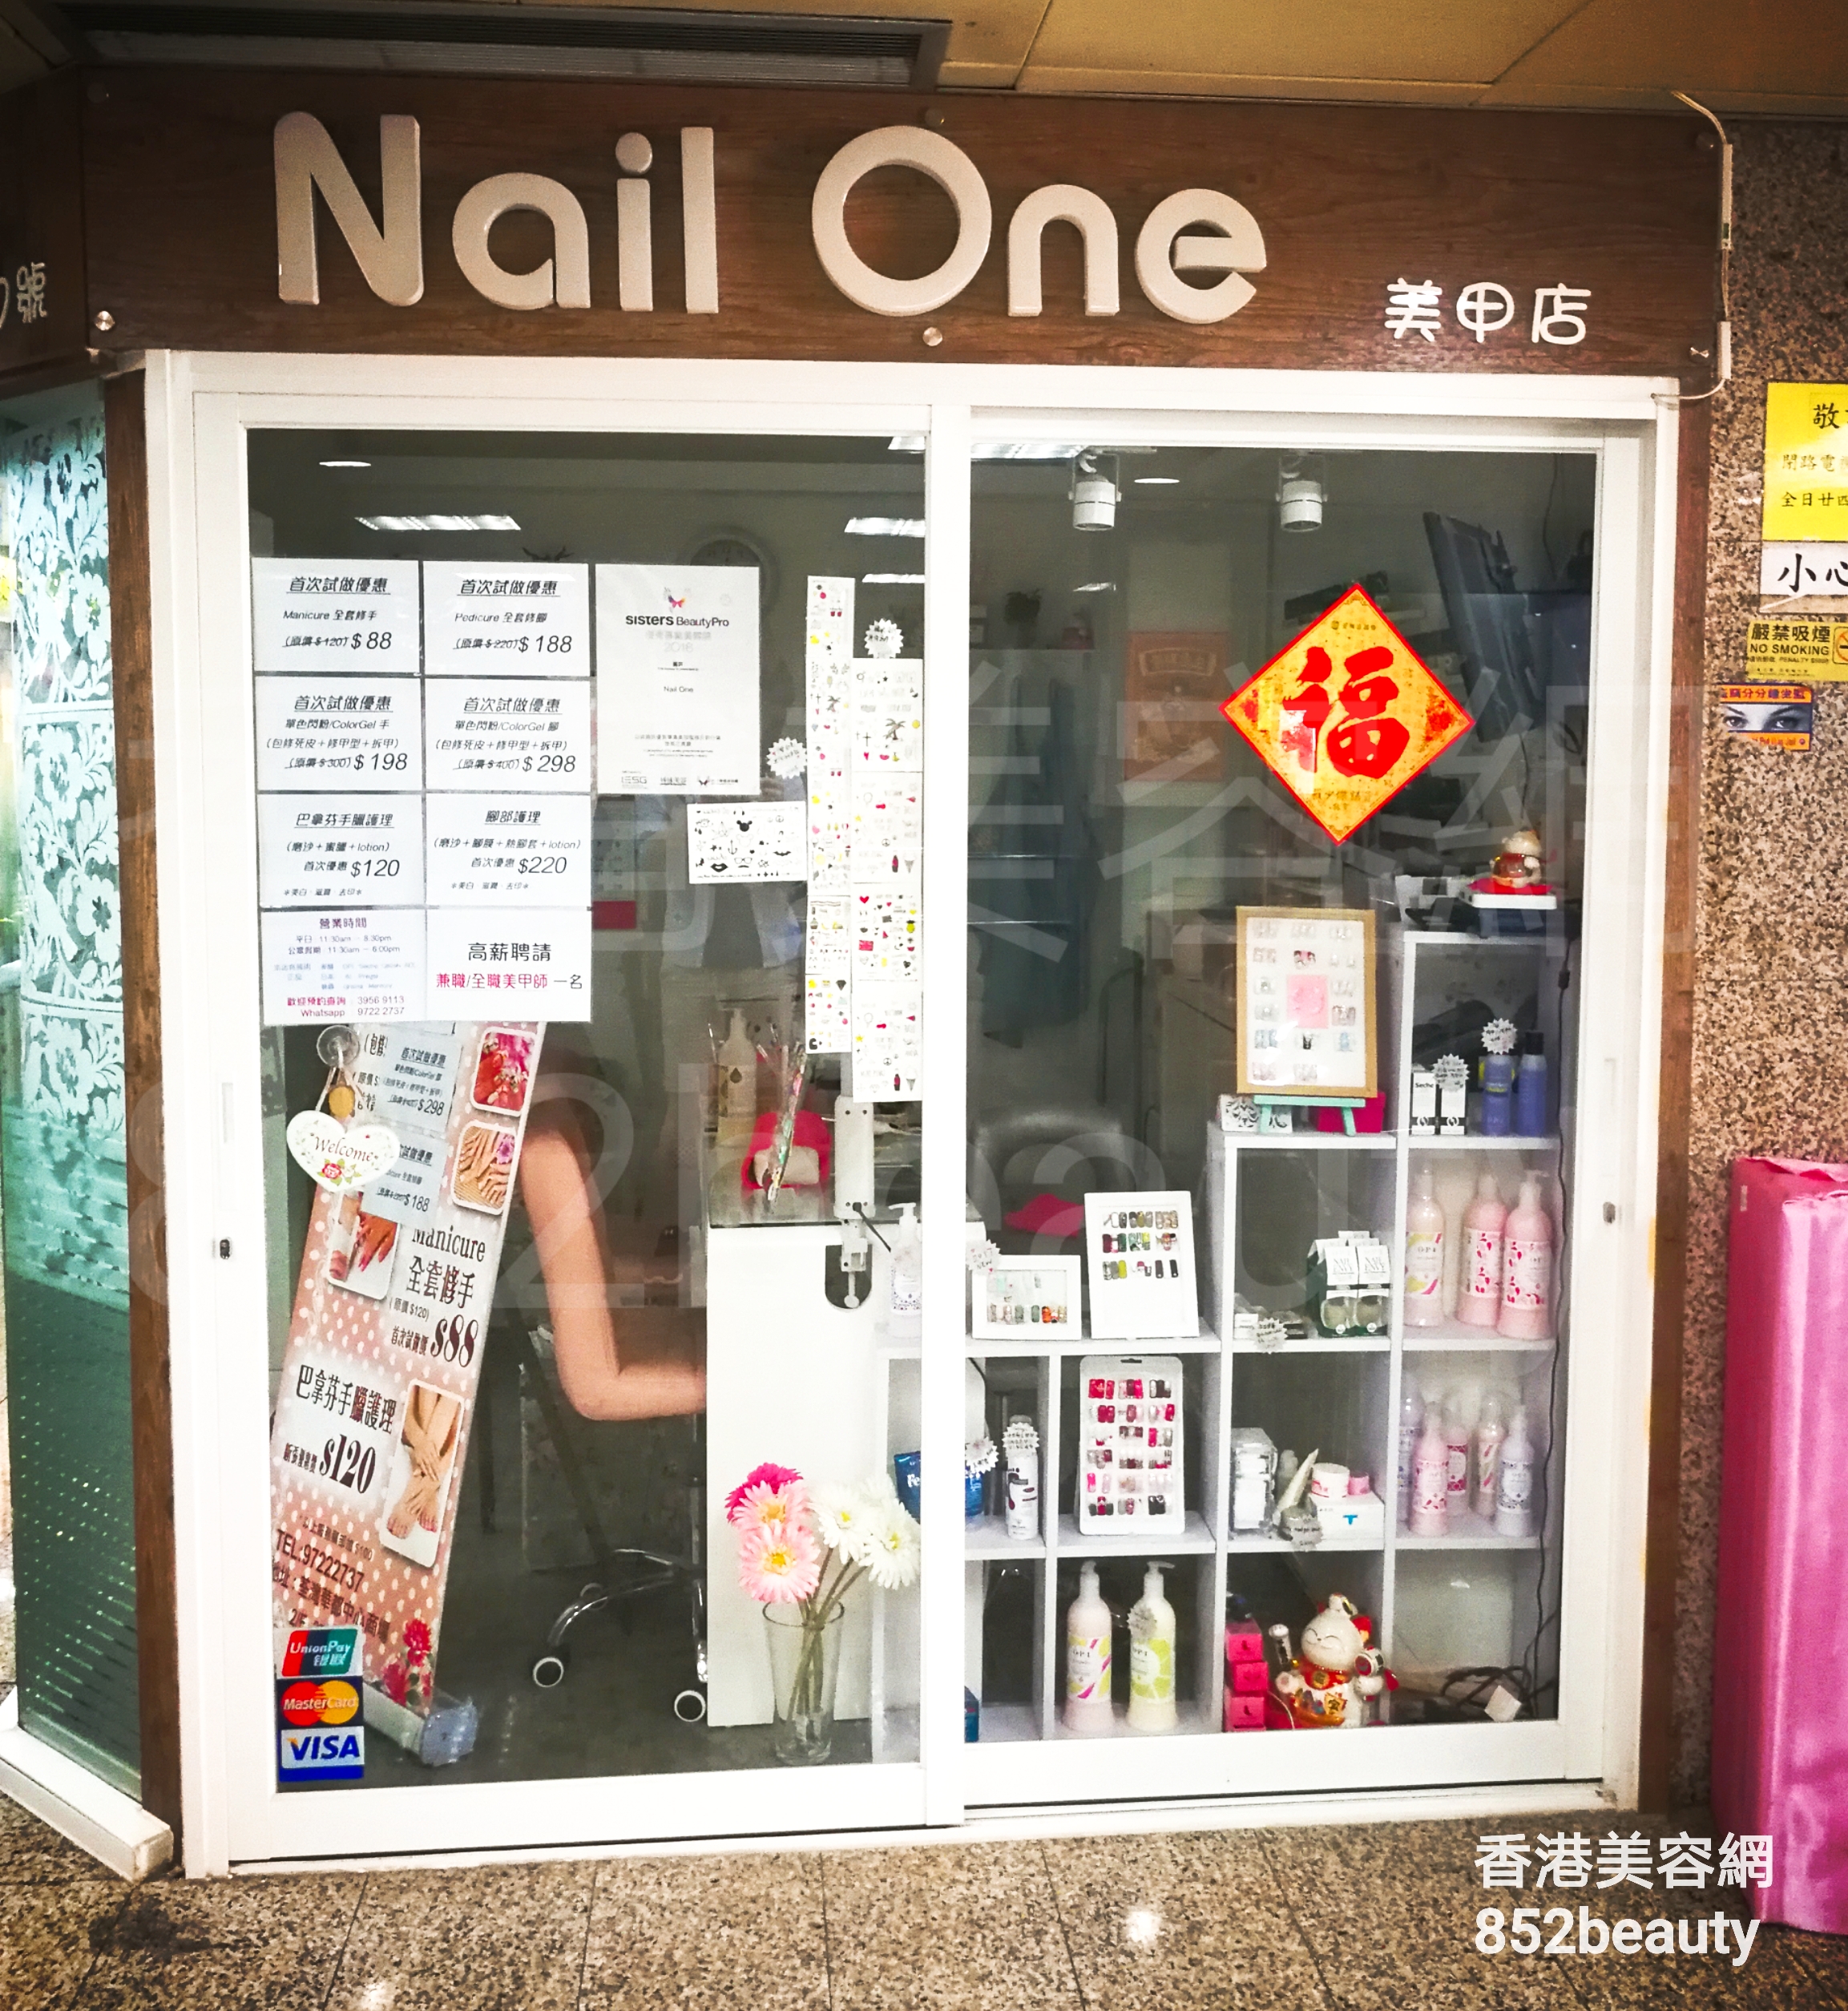 美容院 Beauty Salon: Nail One 美甲店